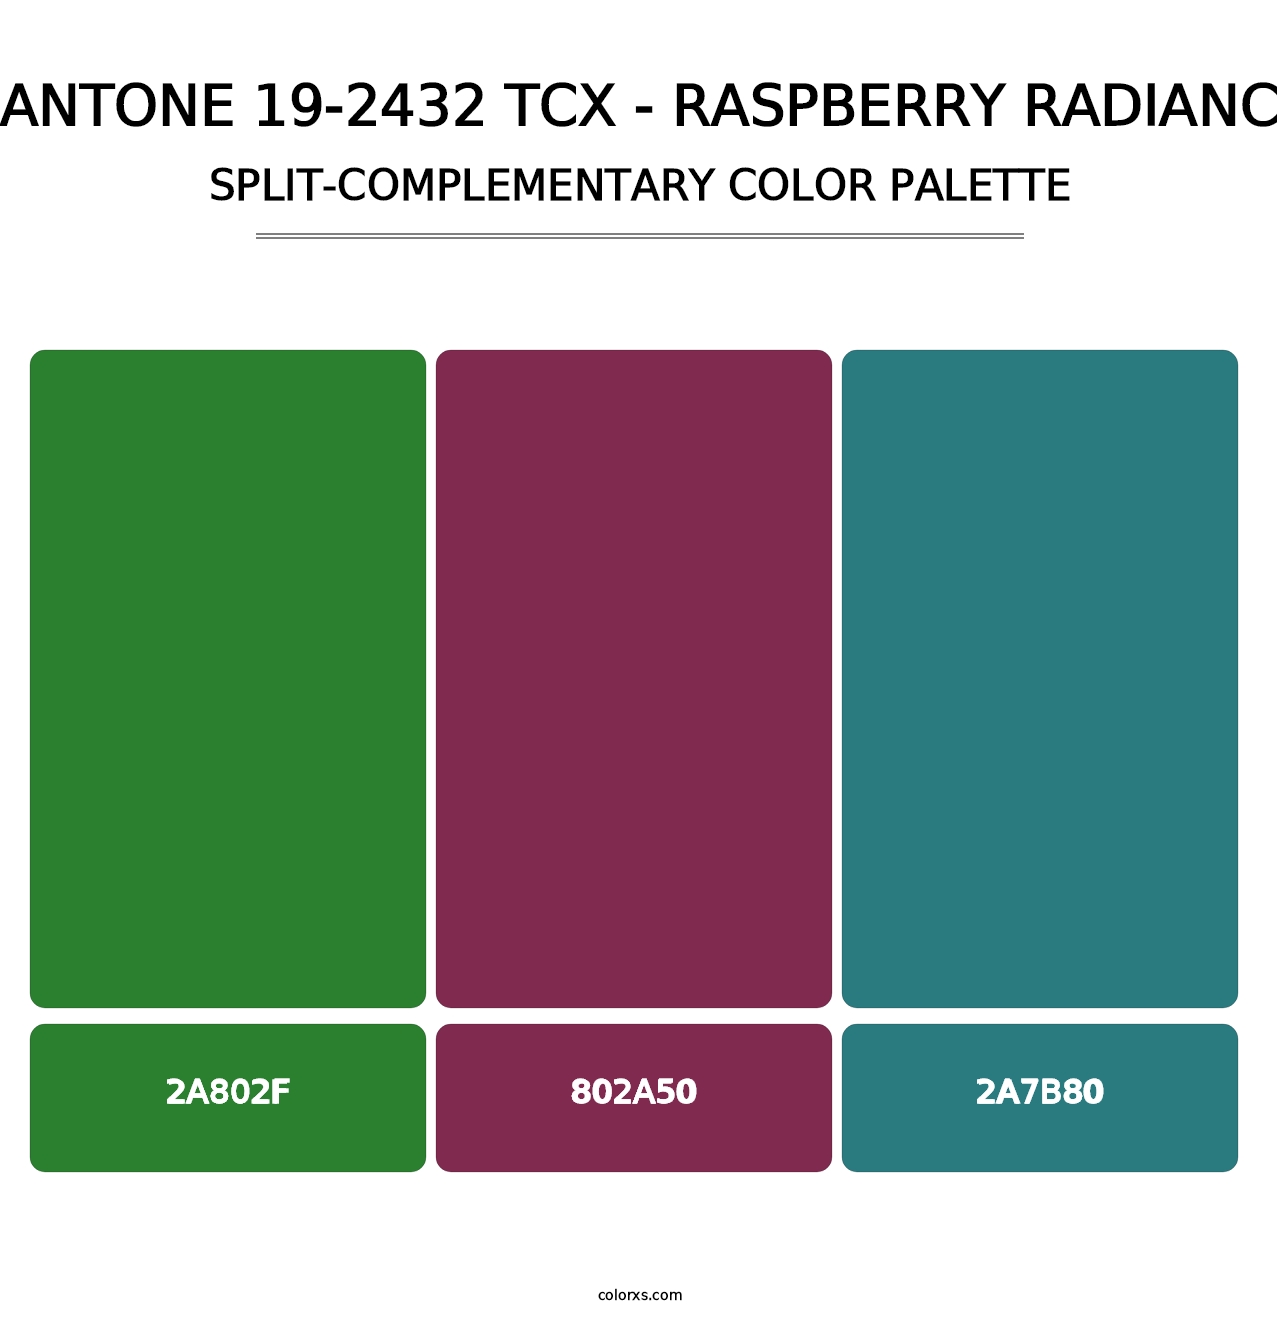 PANTONE 19-2432 TCX - Raspberry Radiance - Split-Complementary Color Palette